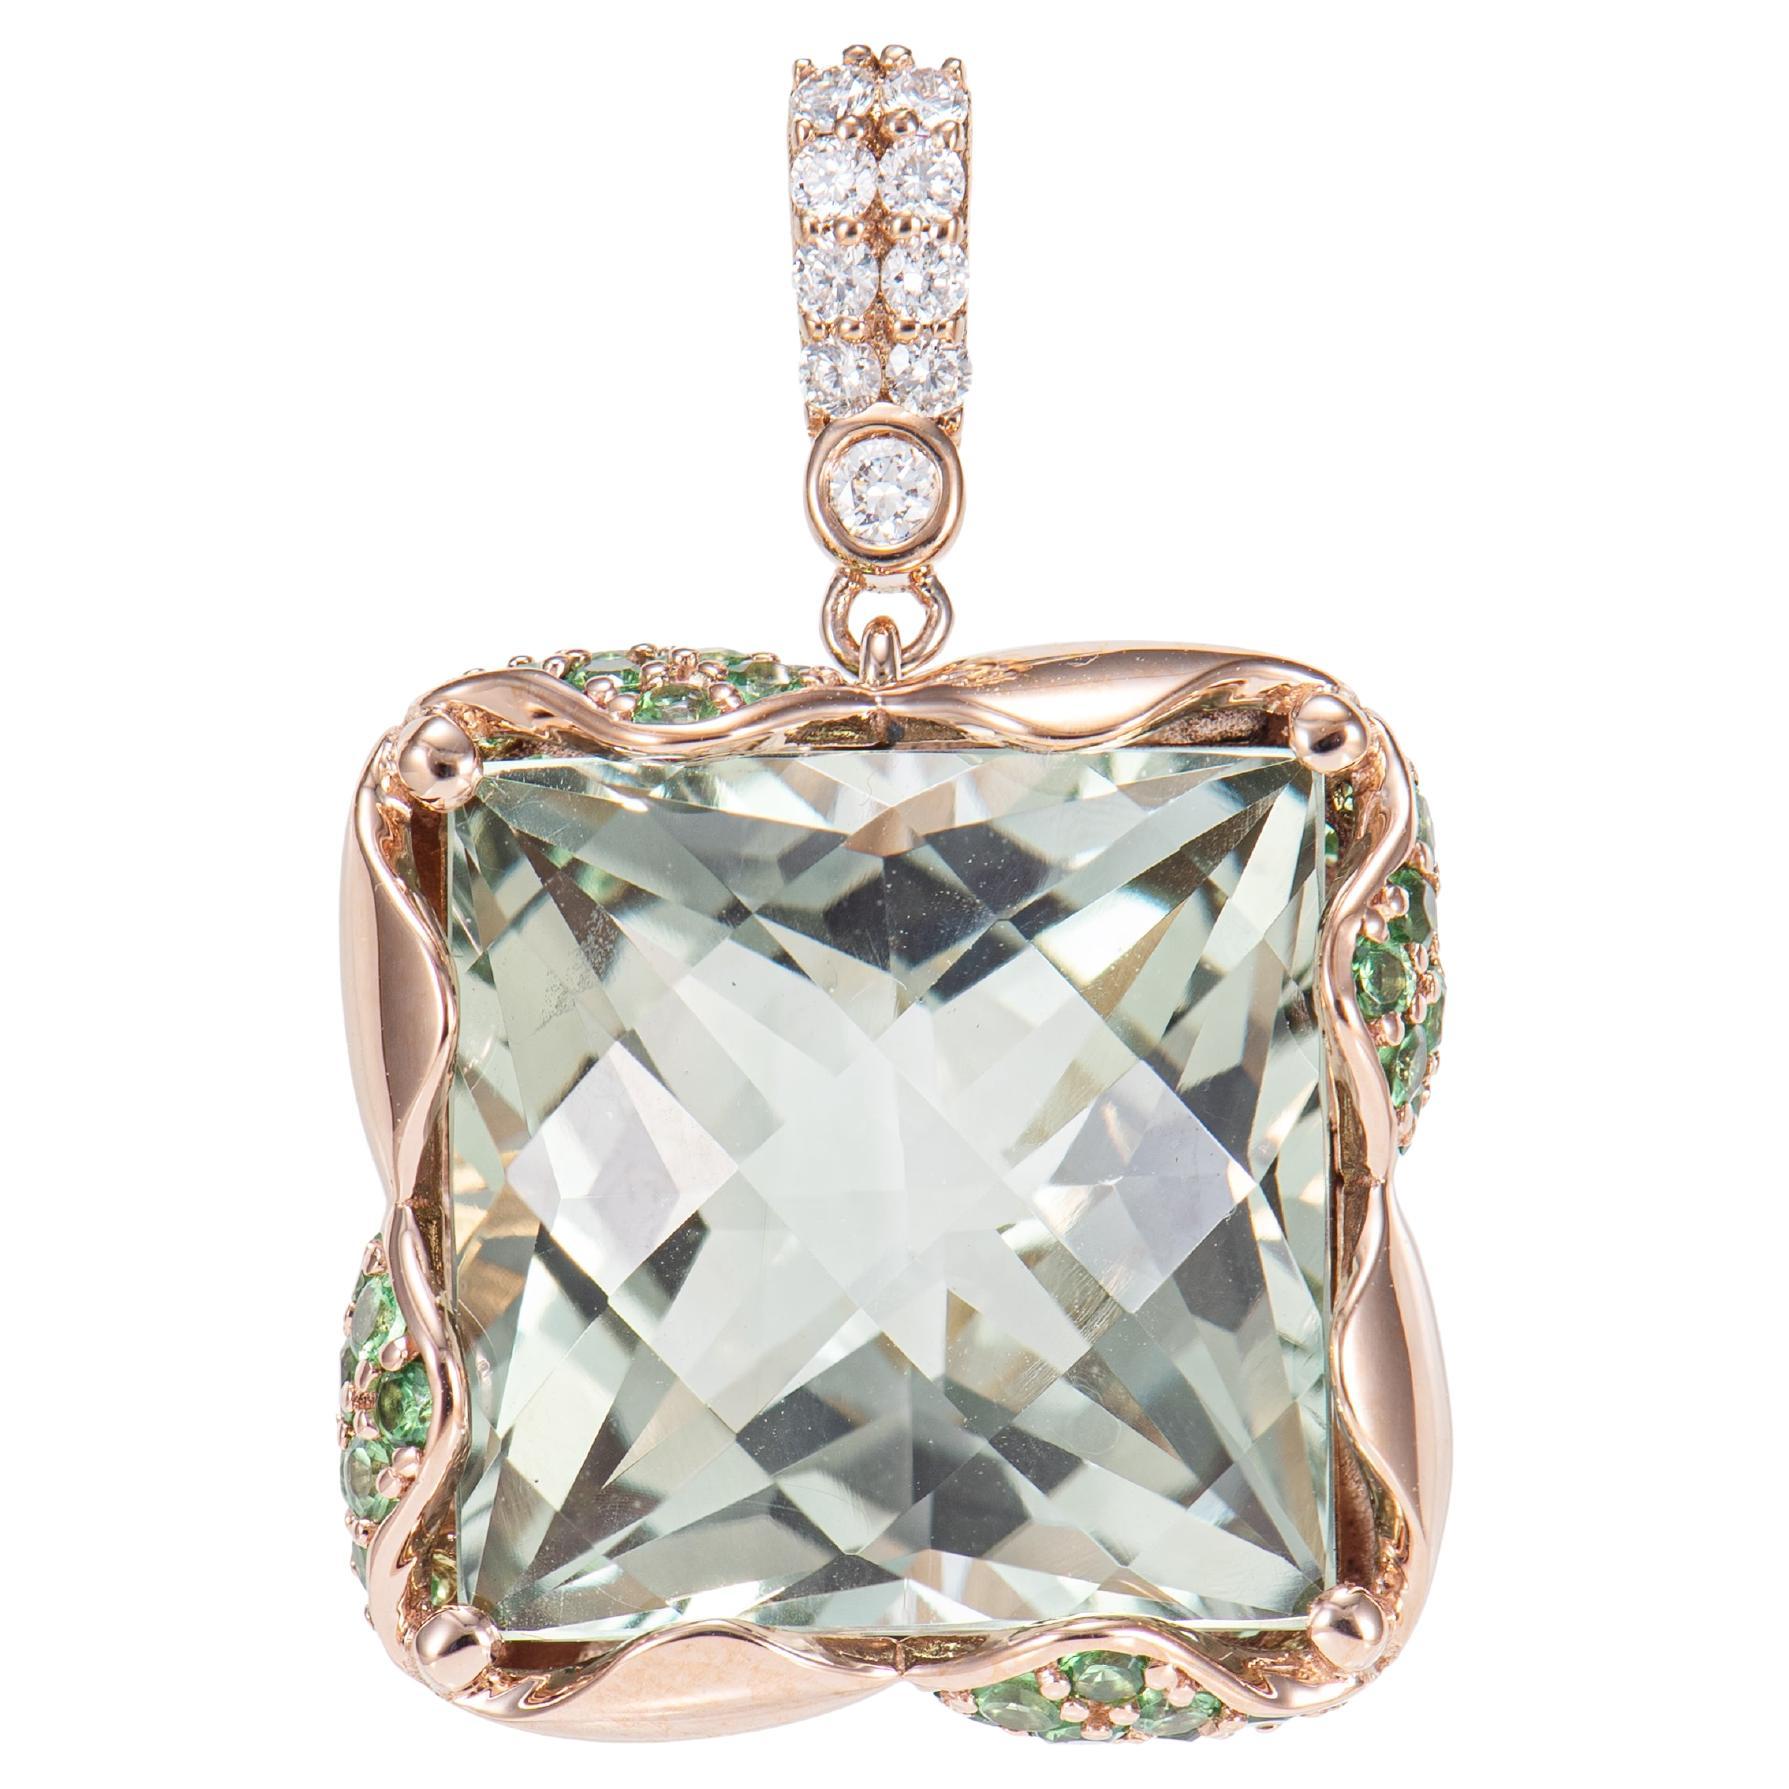 Pendentif en quartz menthe de 14,18 carats 18 carats avec tsavorite et diamant blanc.